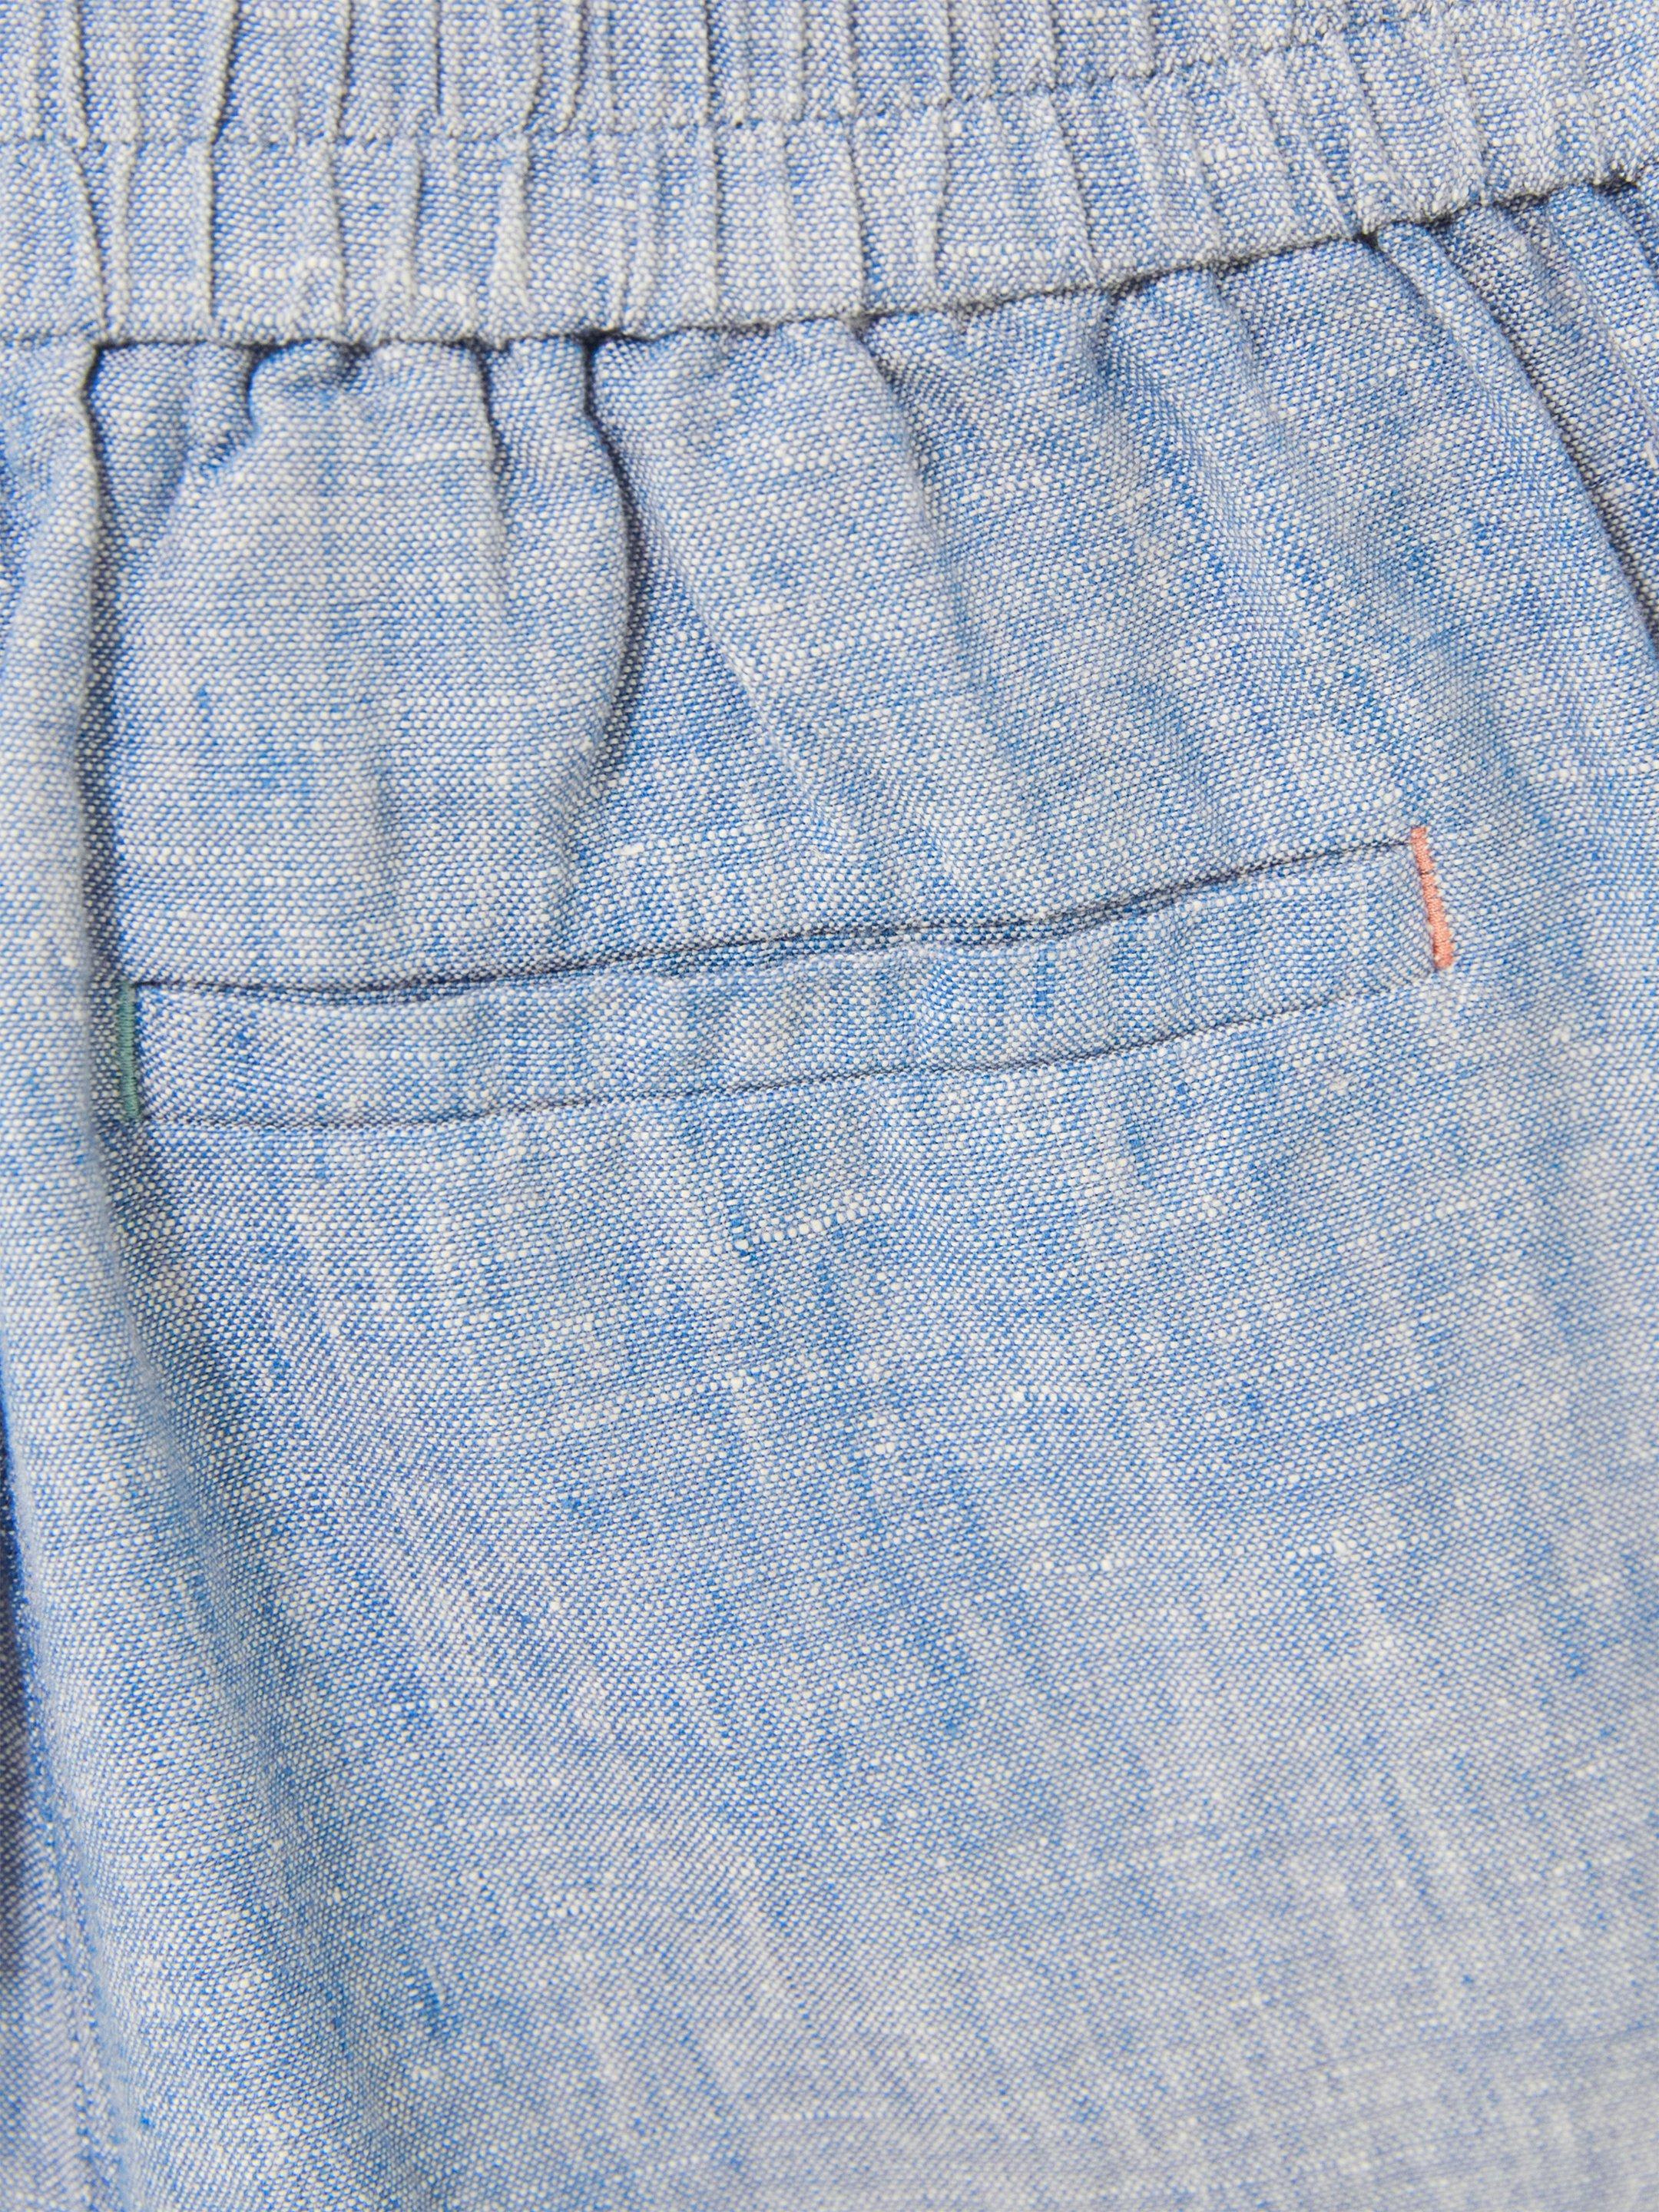 Rowena Linen Short in CHAMB BLUE - FLAT DETAIL